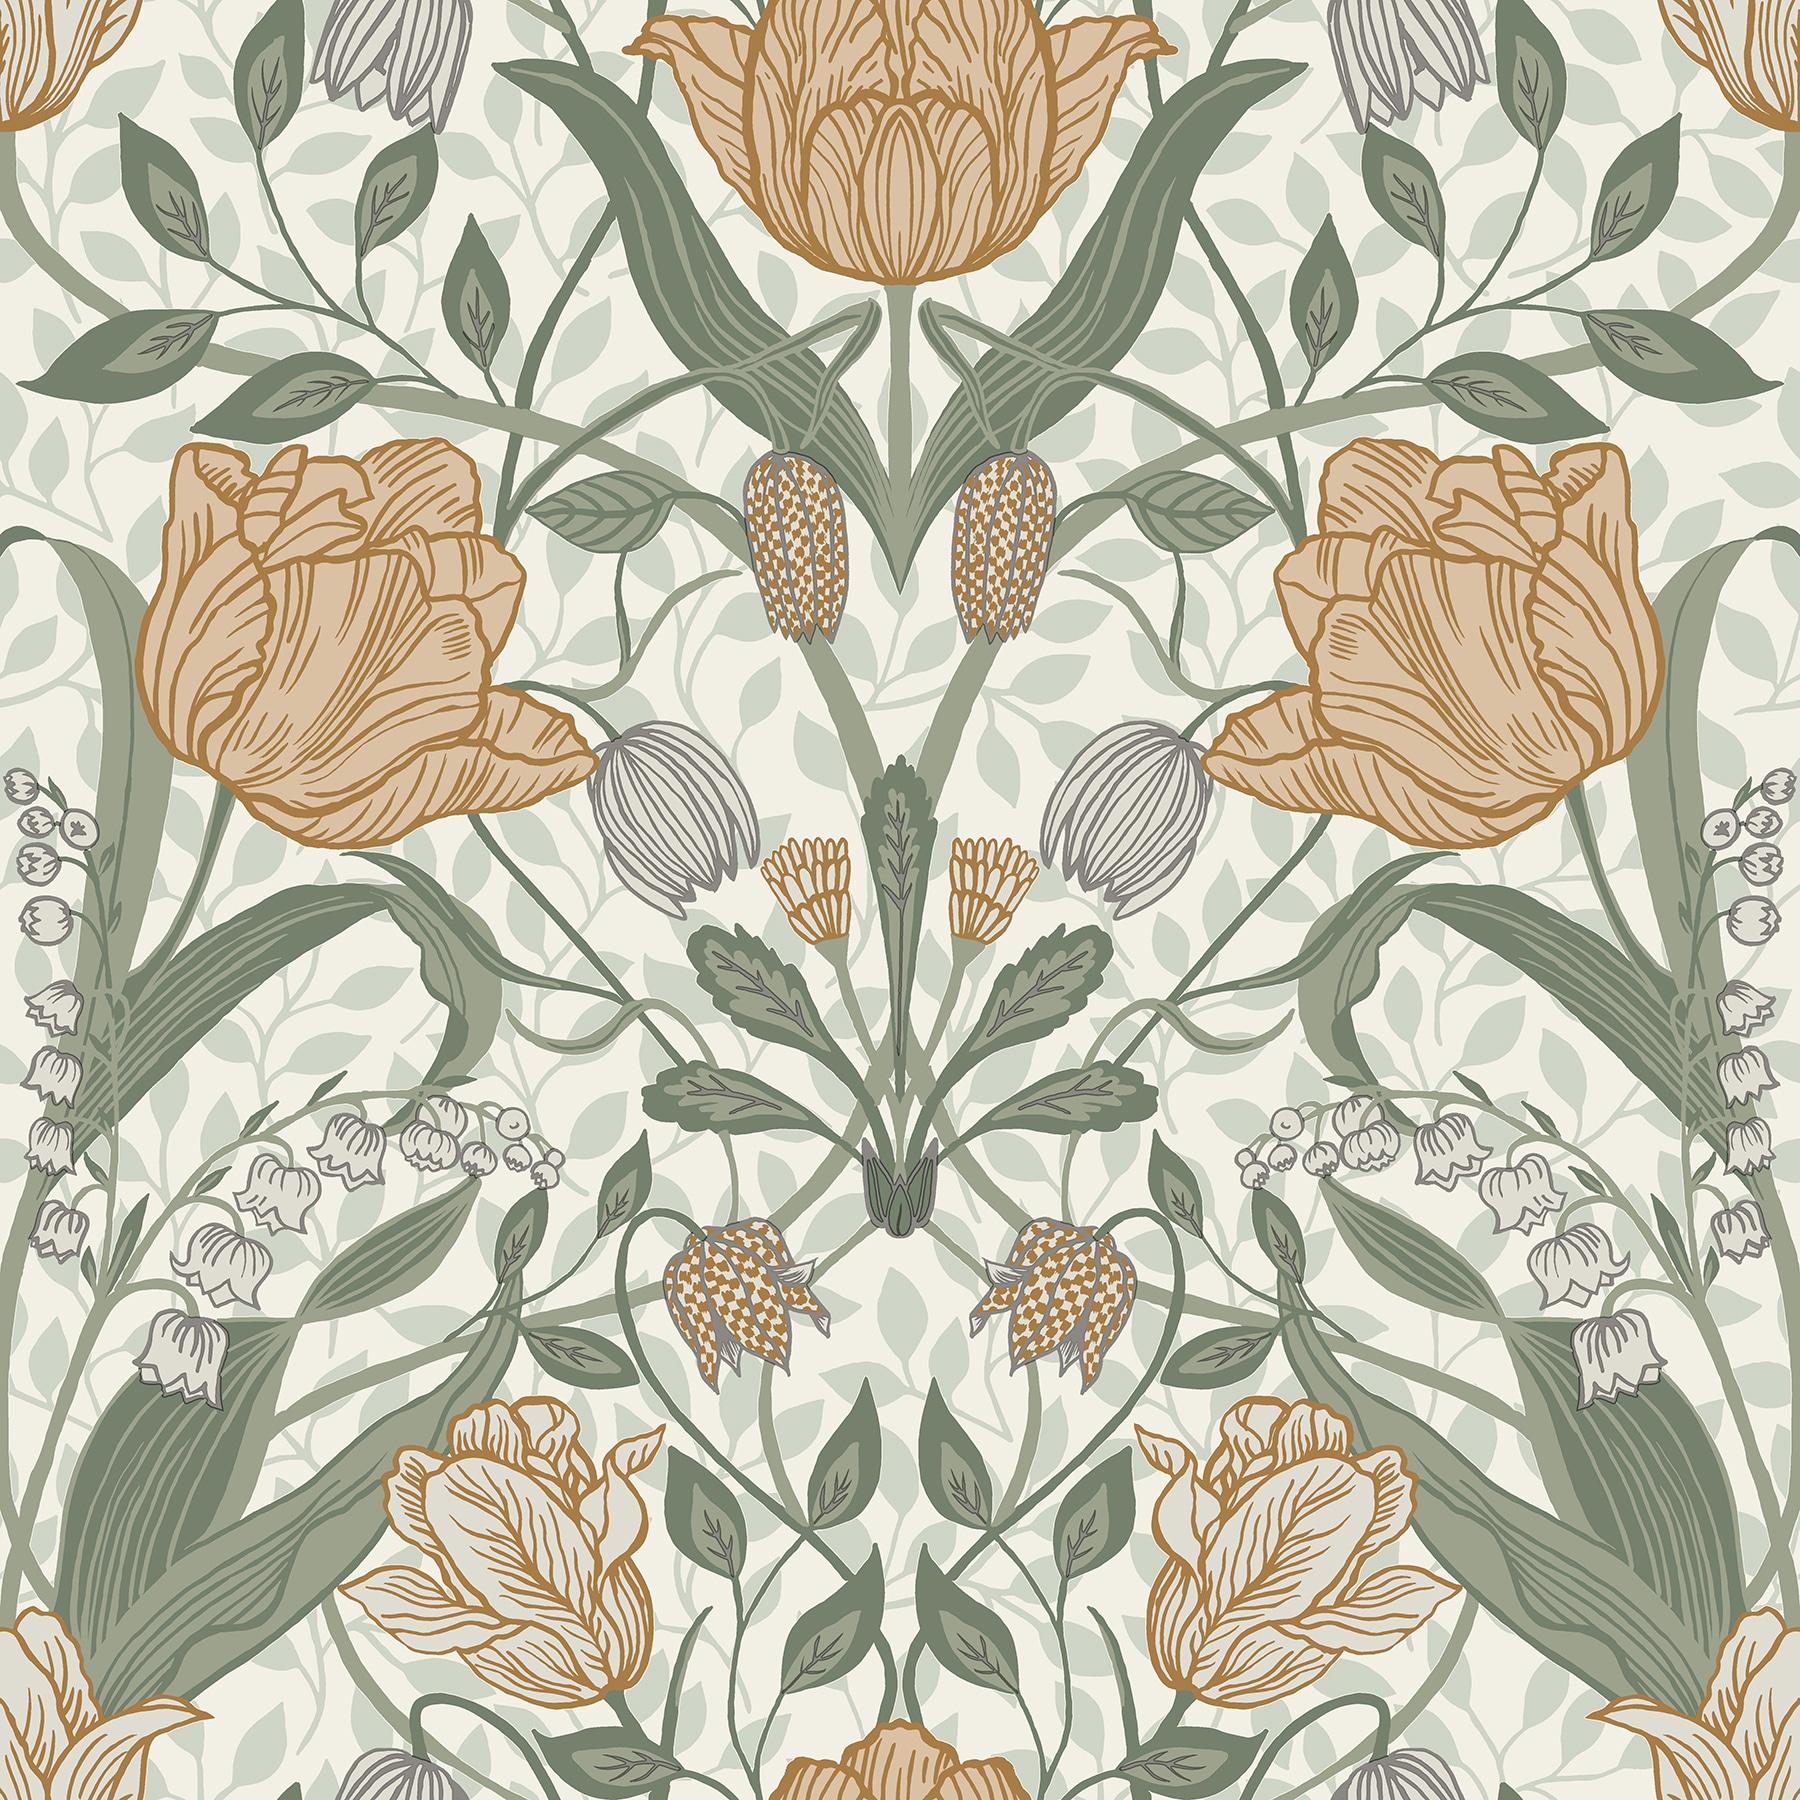 AStreet Prints Tulipa Green Floral Wallpaper in the Wallpaper department  at Lowescom